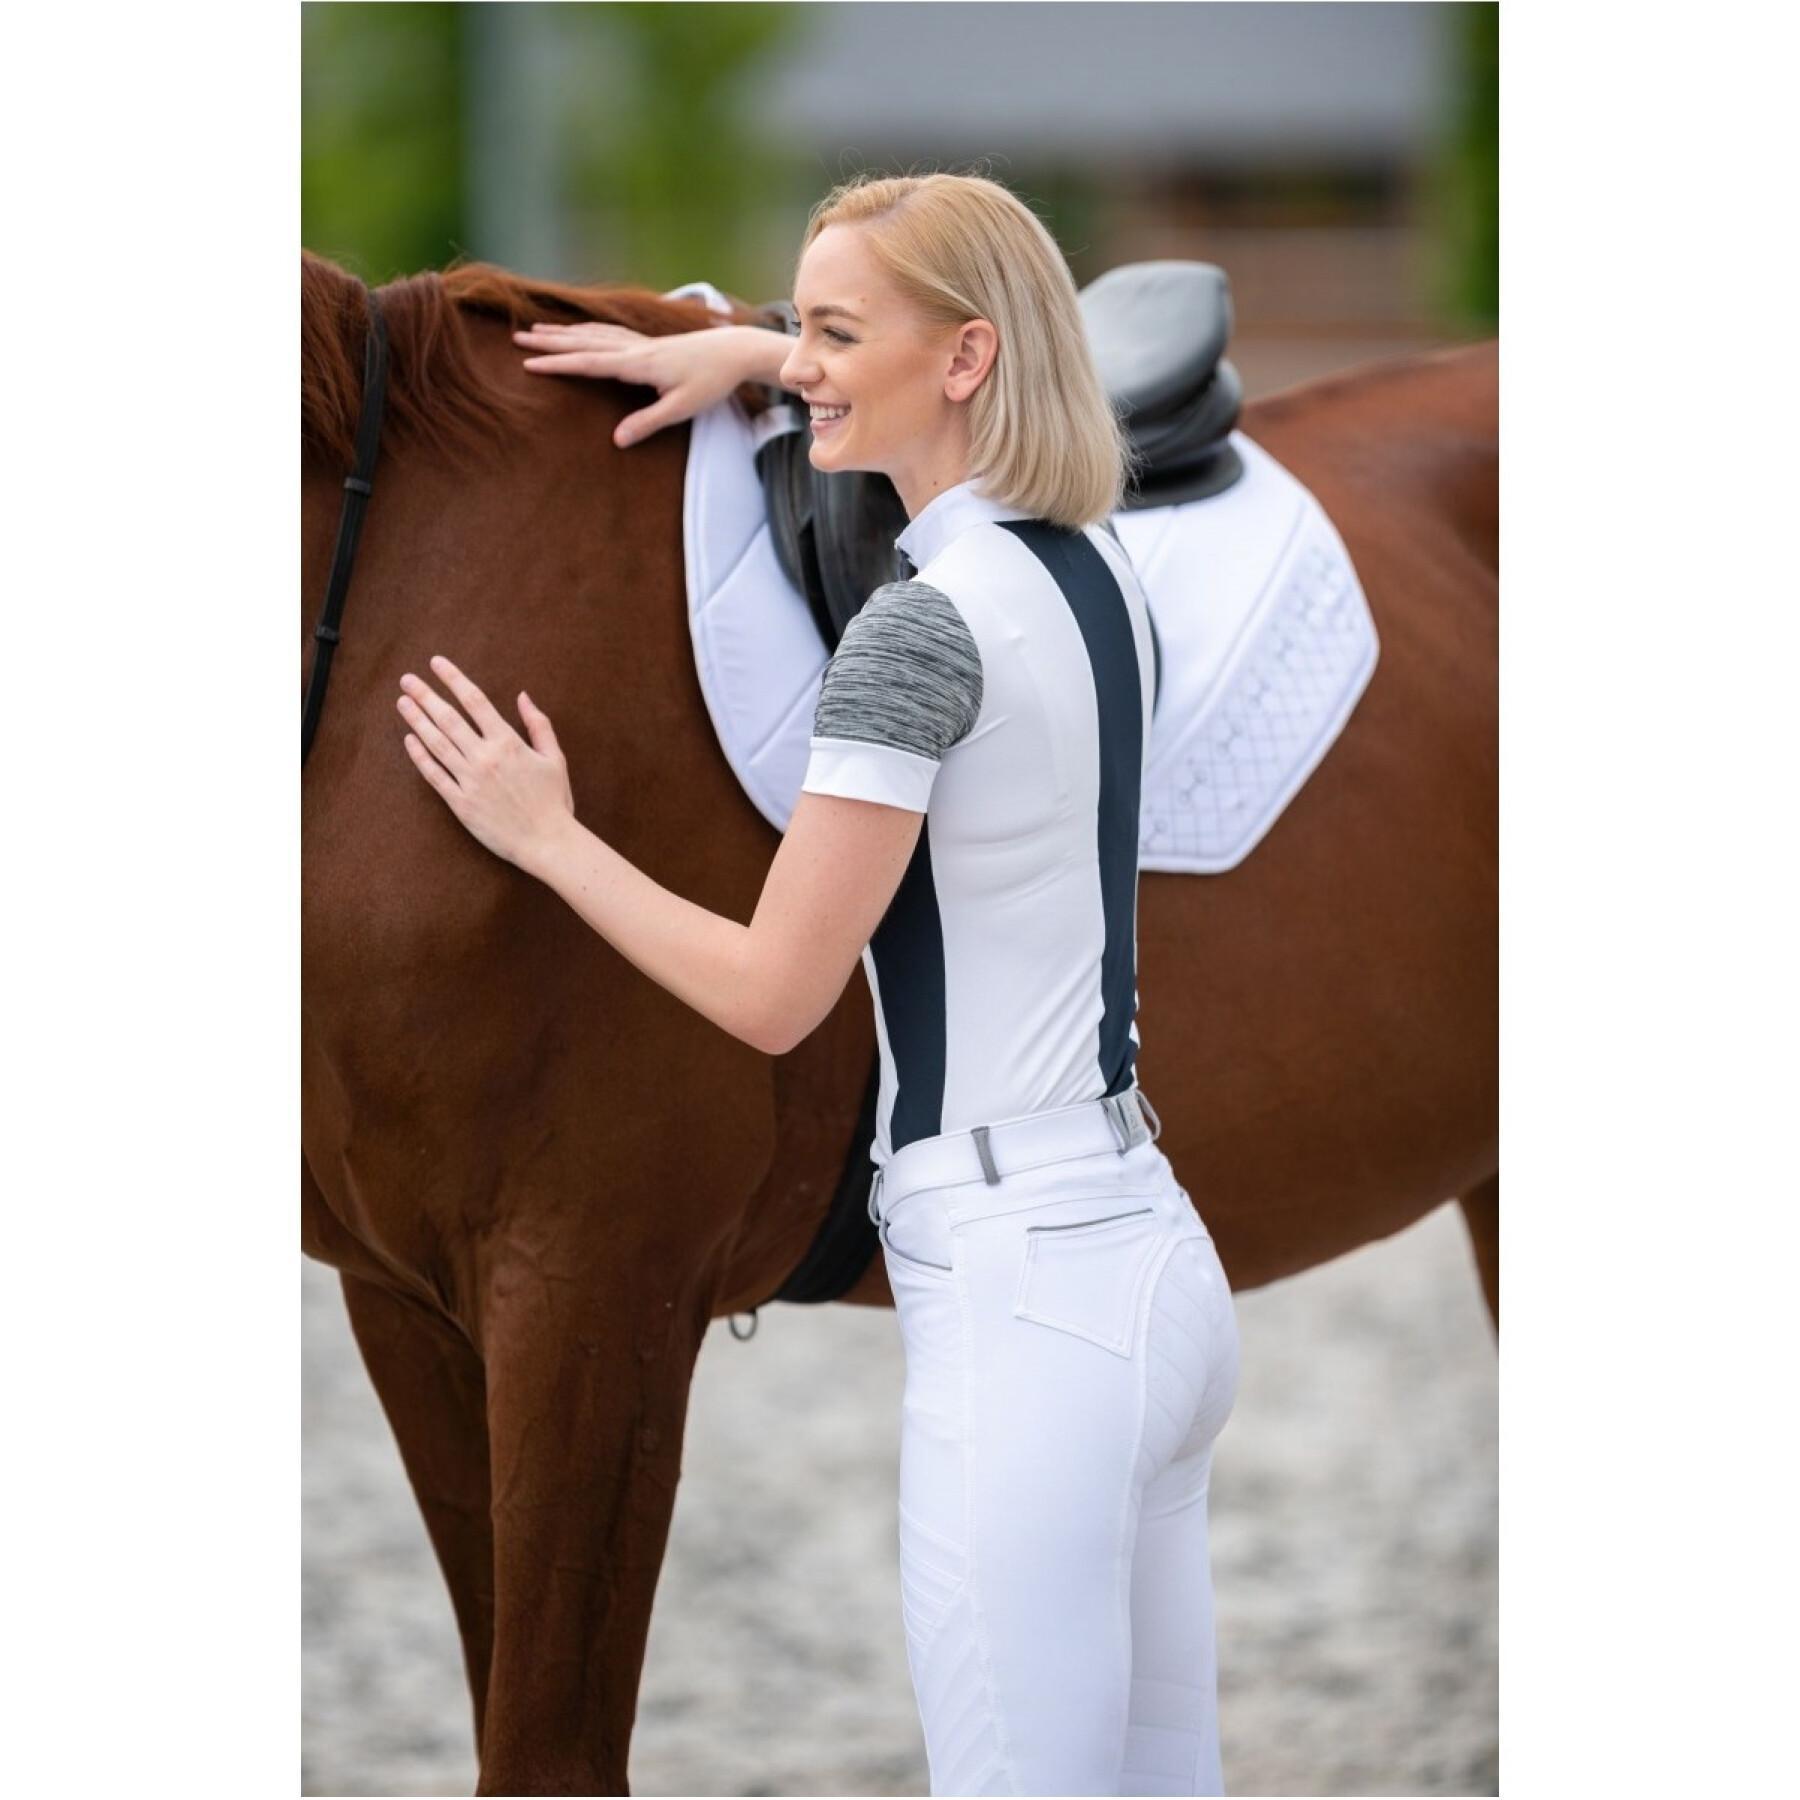 Horse riding polo shirt for women Cavalliera Jet set